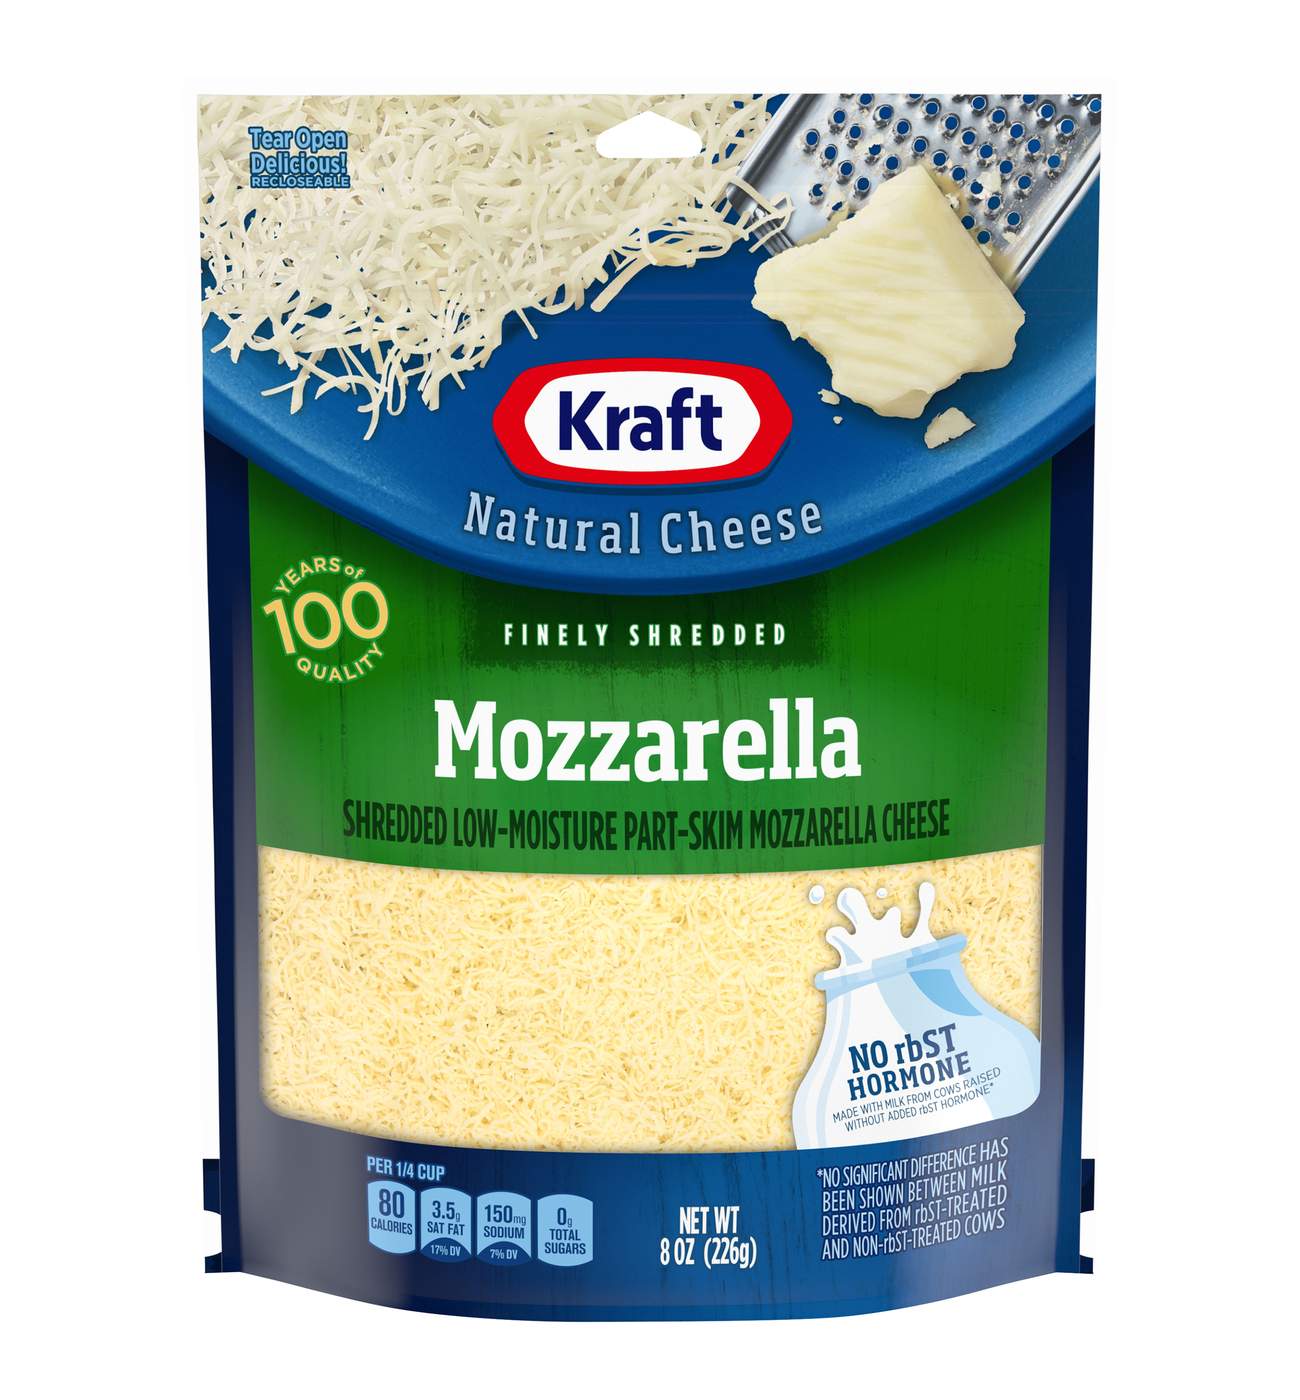 Kraft Low Moisture Part-Skim Mozzarella Finely Shredded Cheese; image 1 of 4